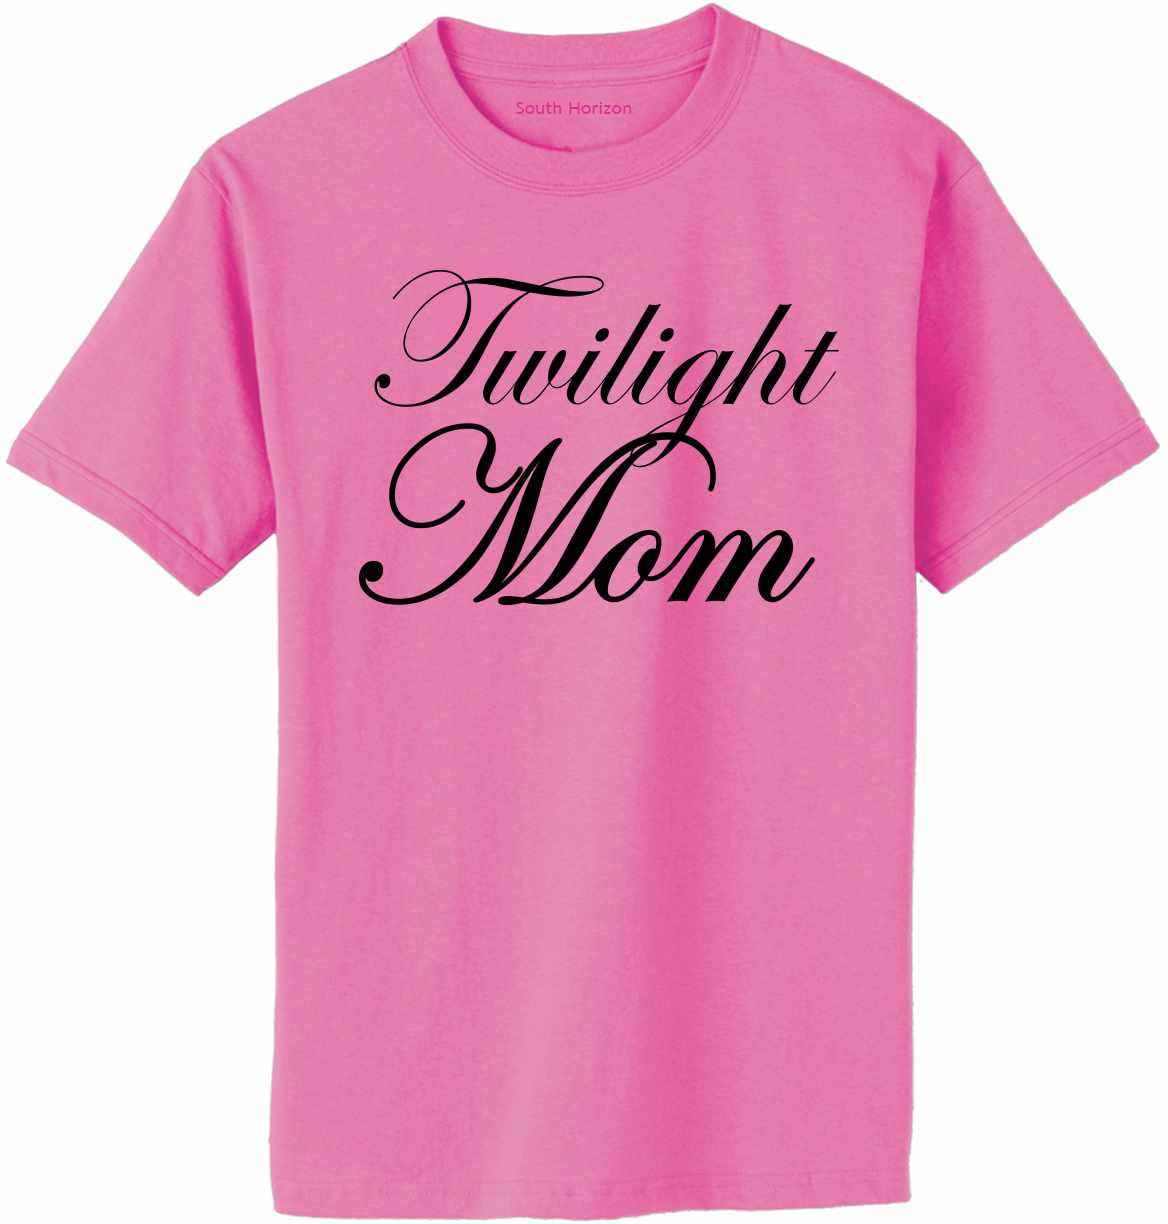 TWILIGHT MOM Adult T-Shirt (#431-1)